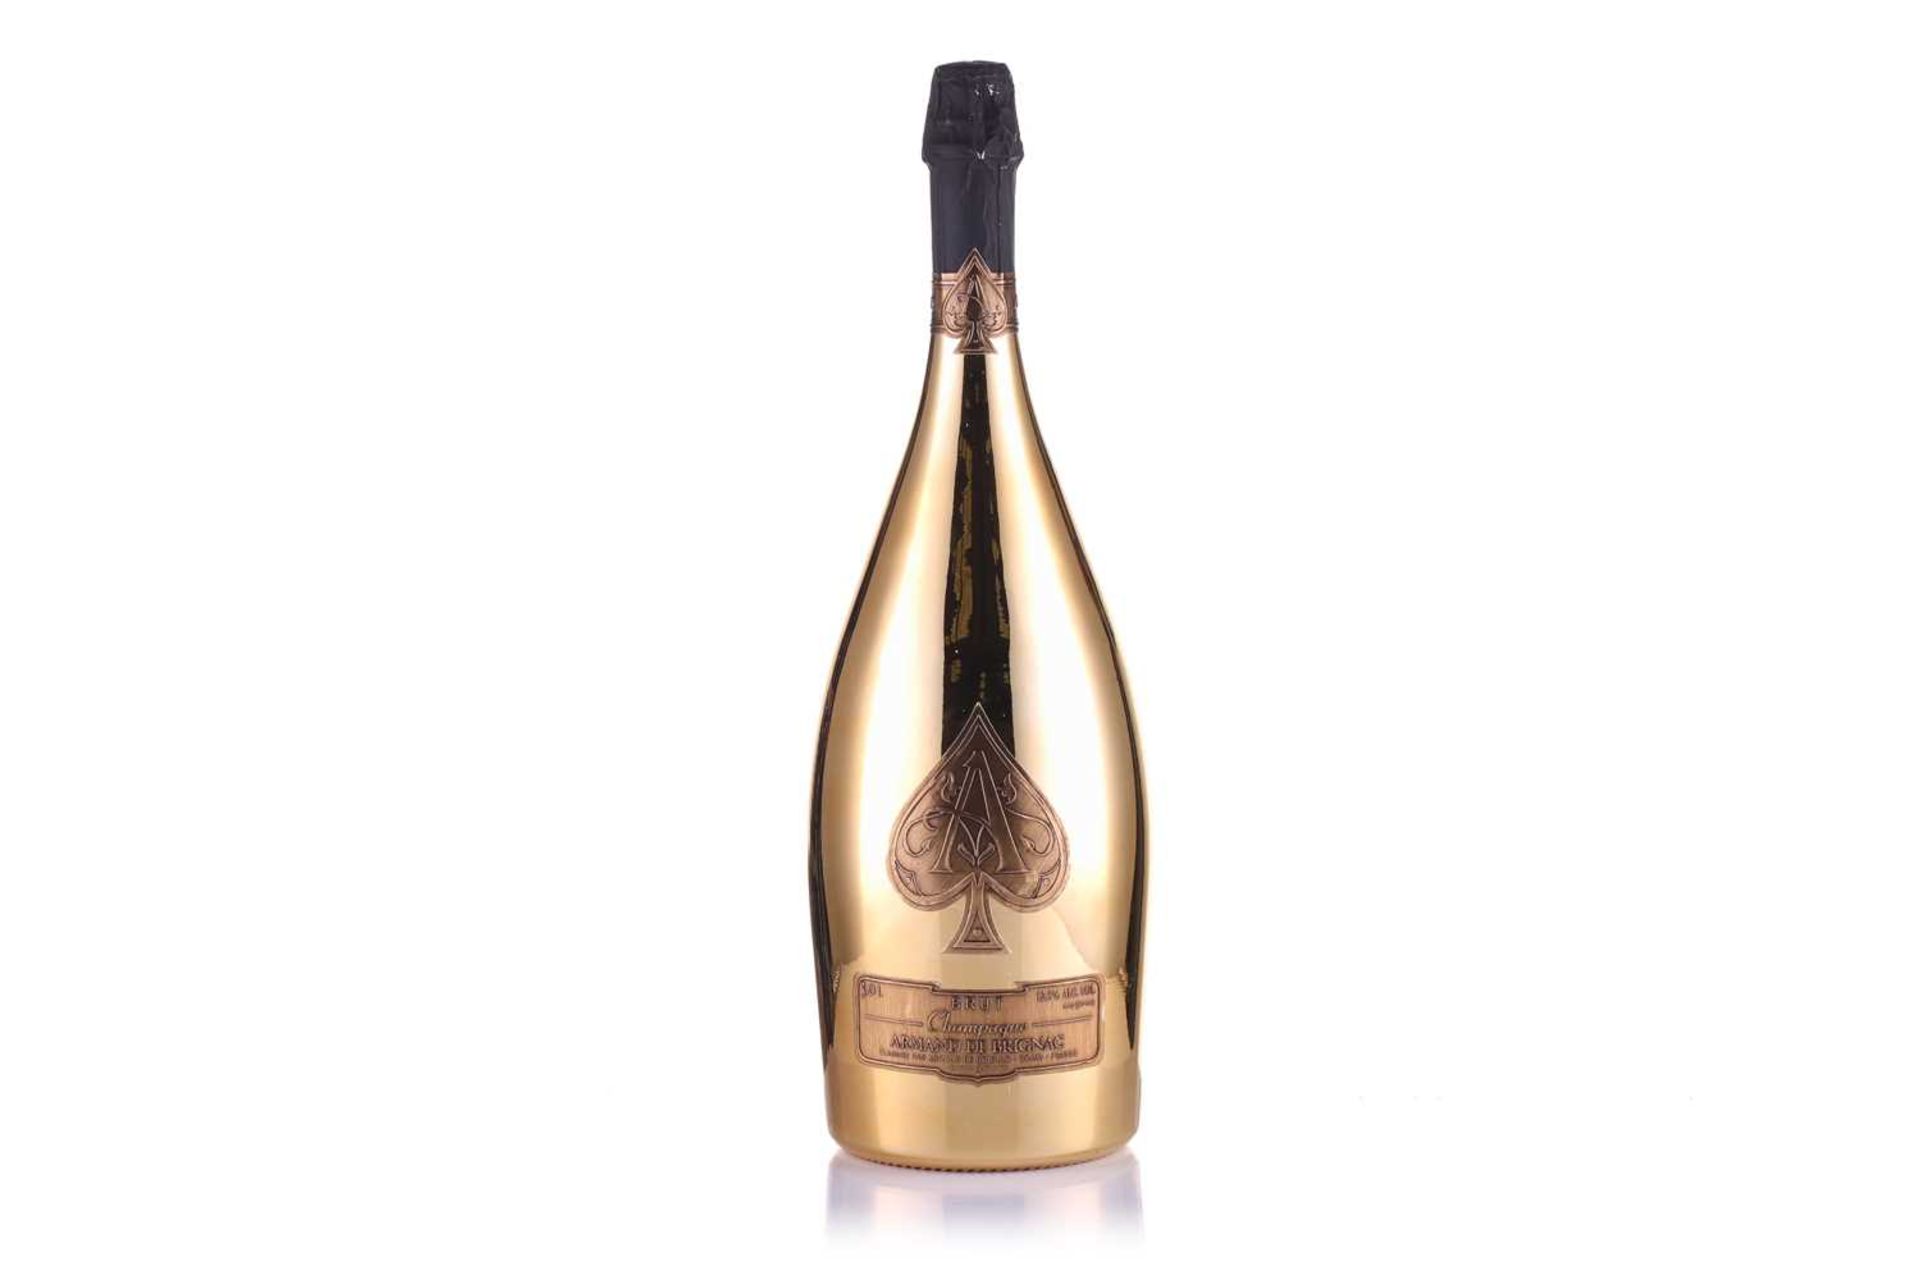 A Jeroboam of Cattier Armand de Brignac Ace of Spades Brut Champagne, 3lt, 12.5%Private collector in